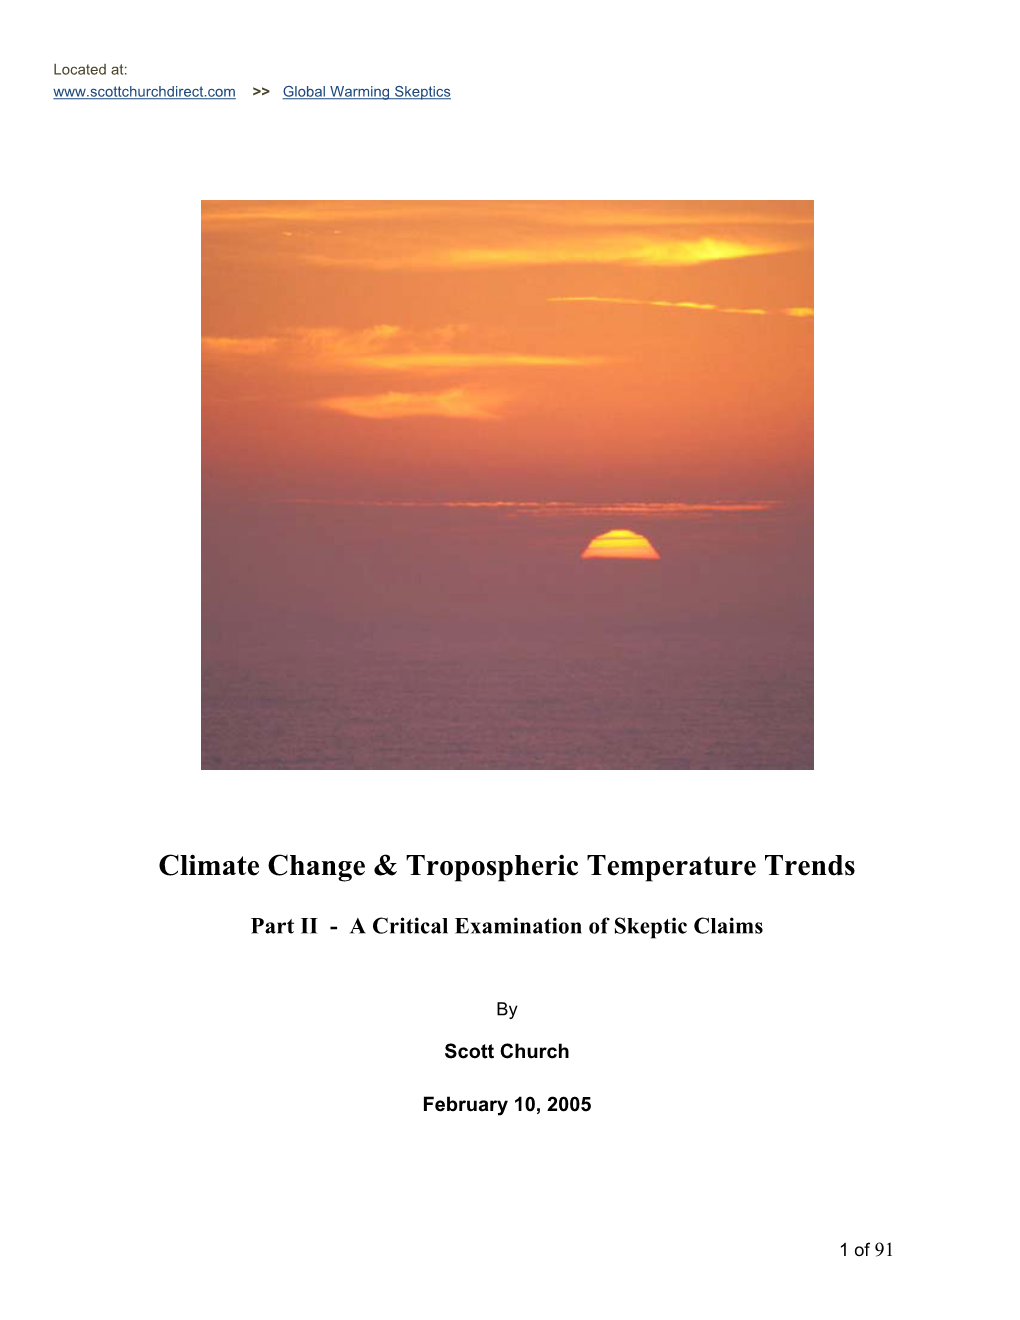 Climate Change & Tropospheric Temperature Trends